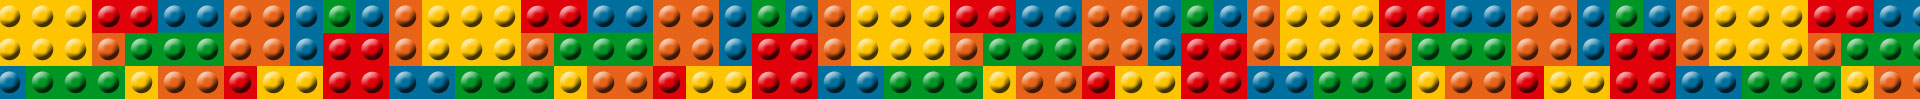 Lego BrickHeadz de El Joker (41588)